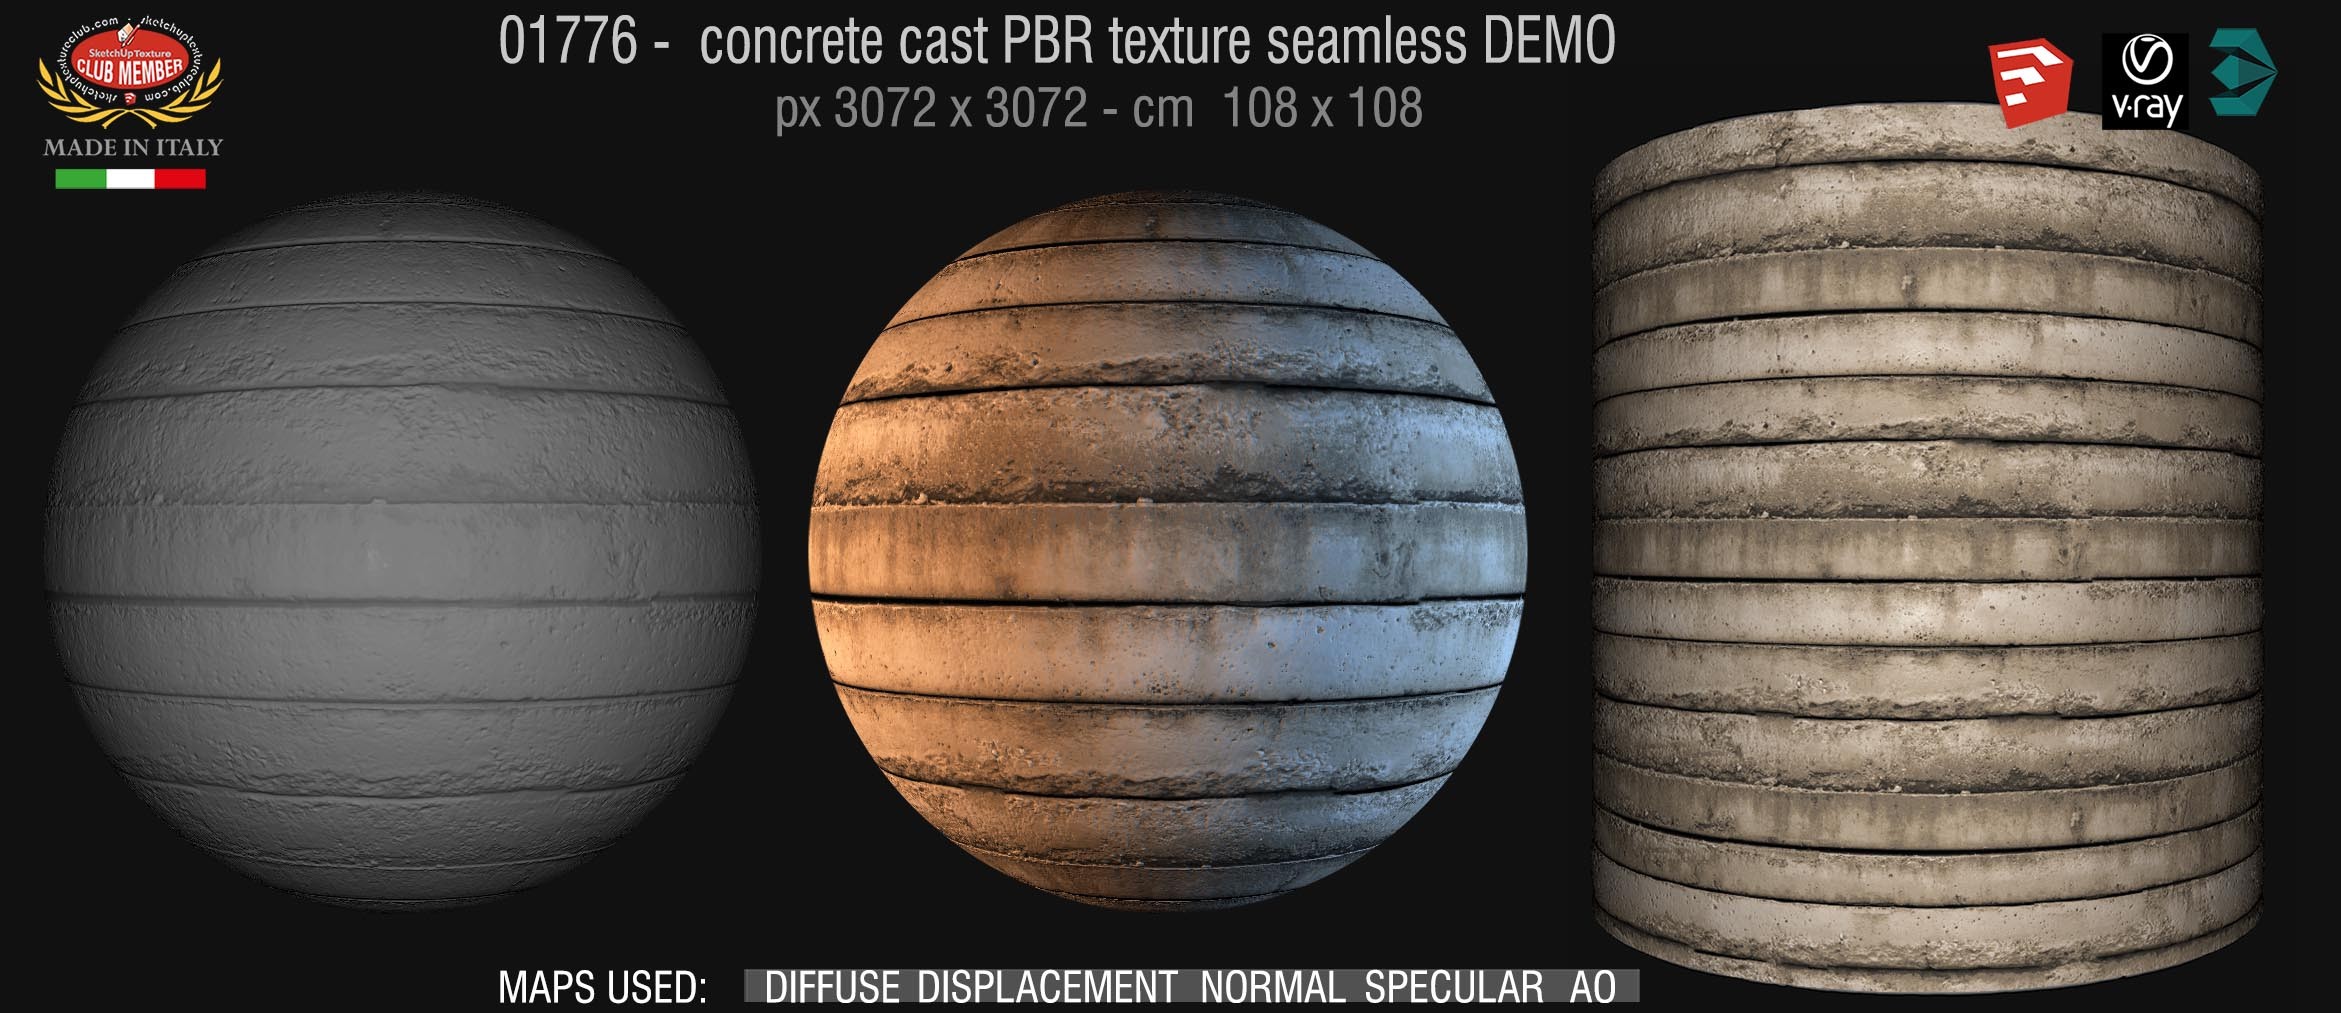 01776 concrete cast PBR texture seamless DEMO